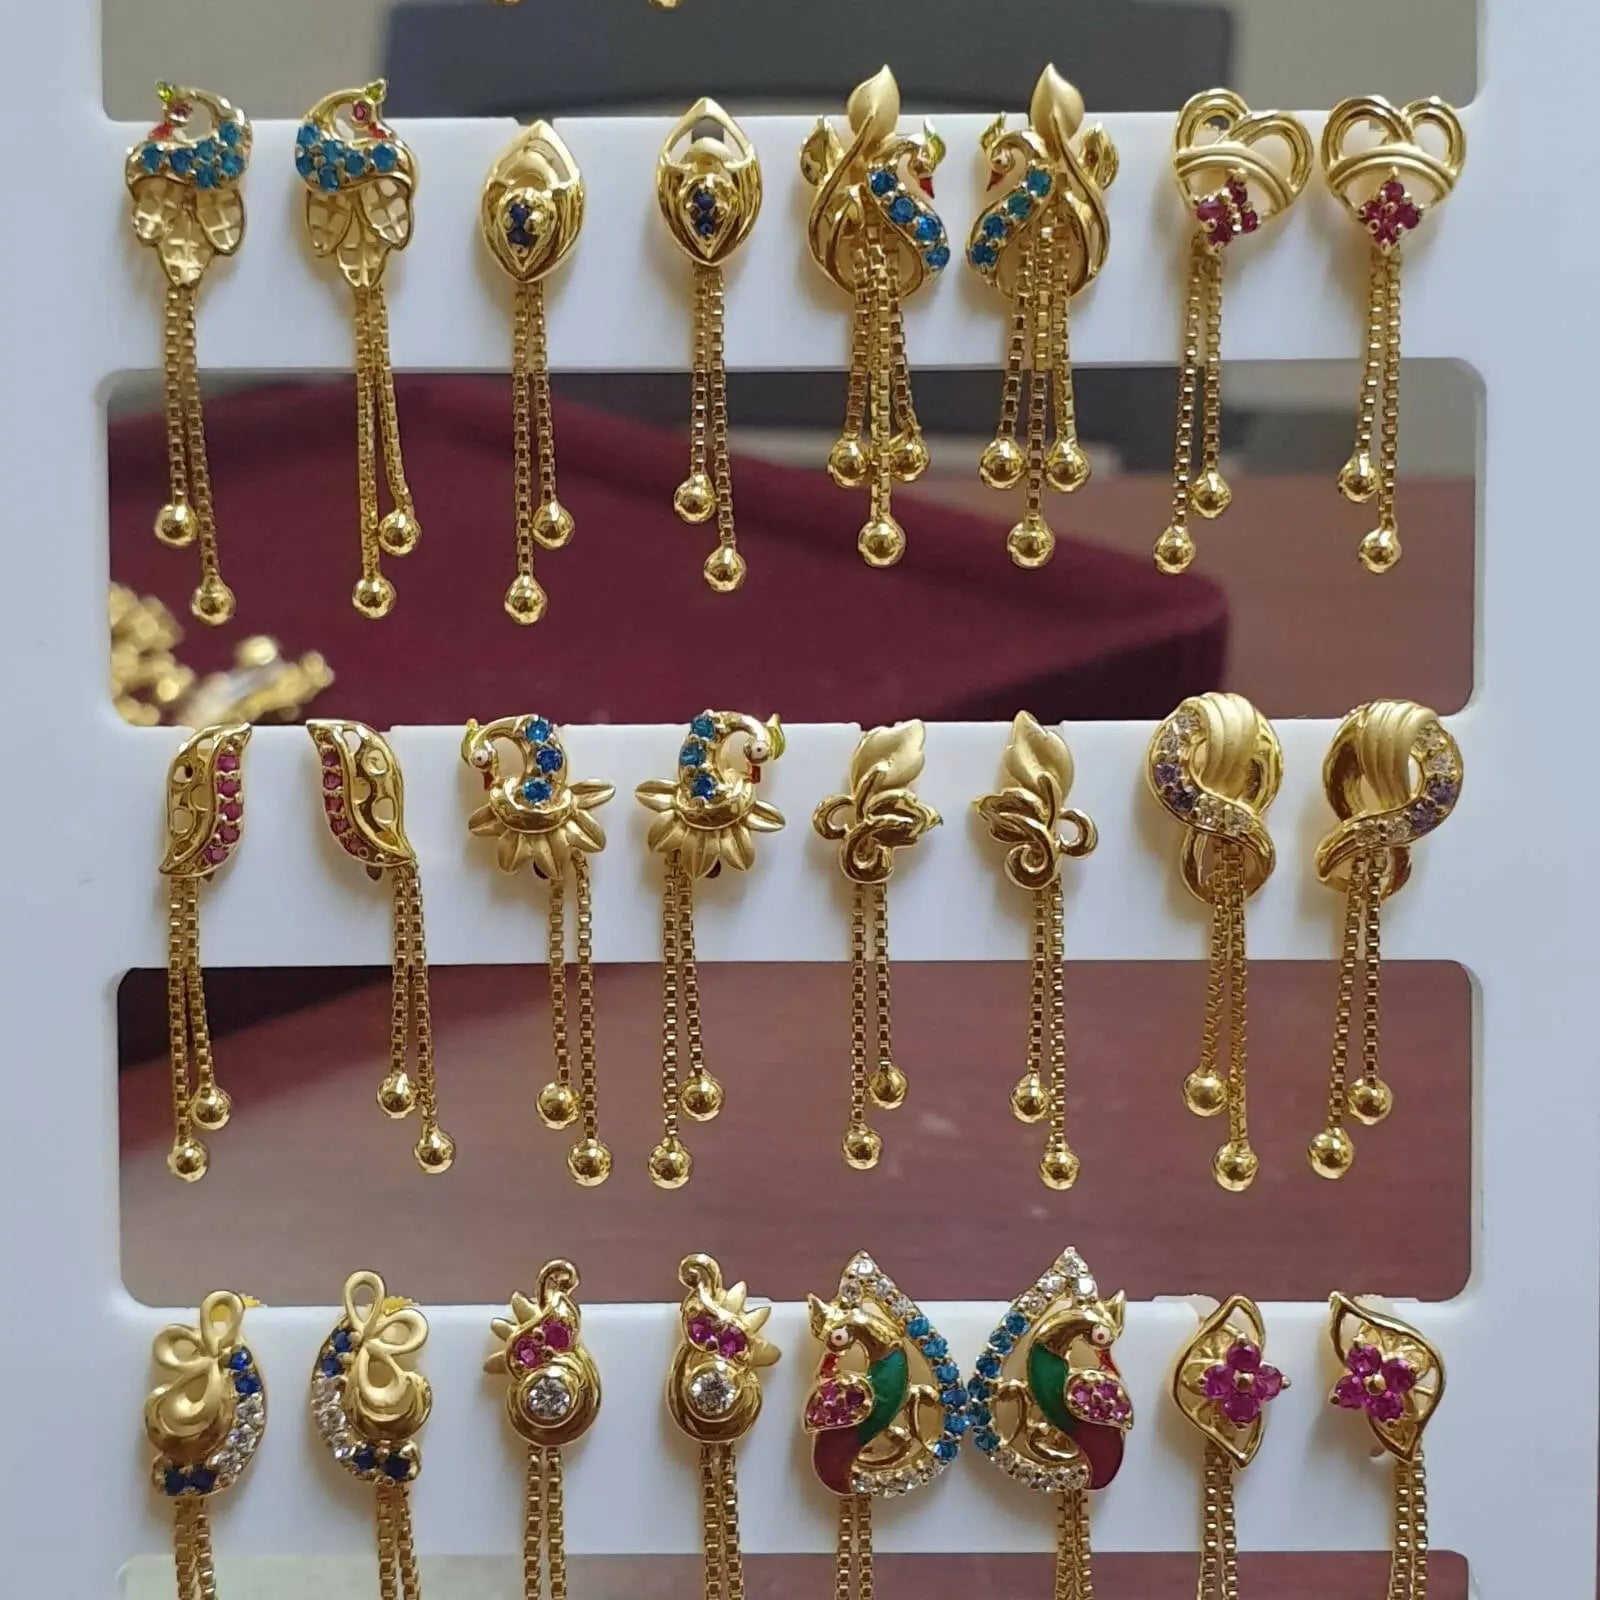 Wholesale Gold Jewellery Suppliers Online Bangalore - Bhikshu jewels